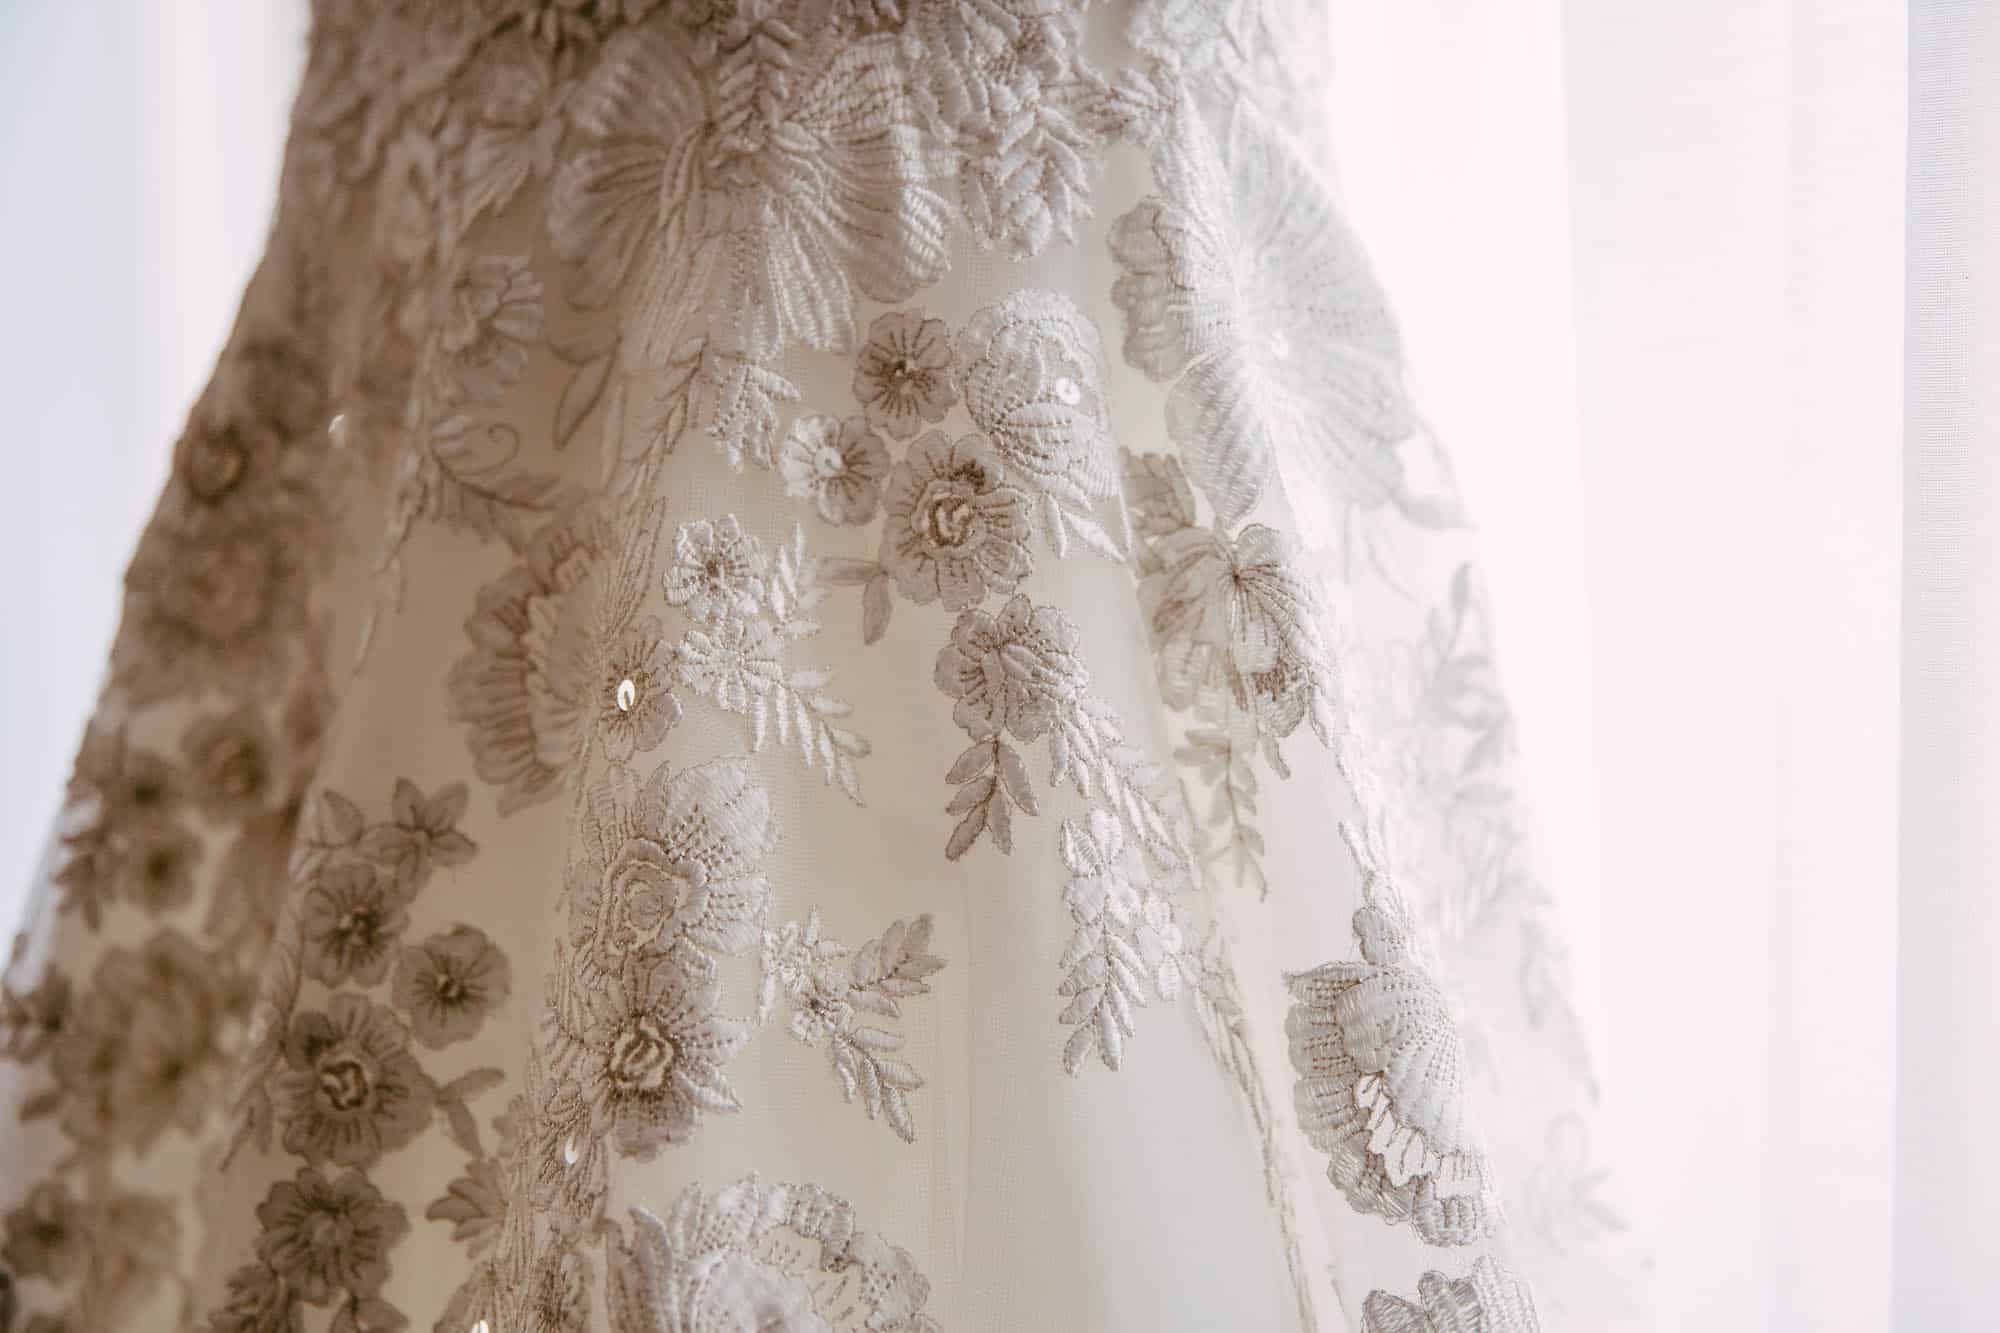         A line of wedding dress hangs on a windowsill.